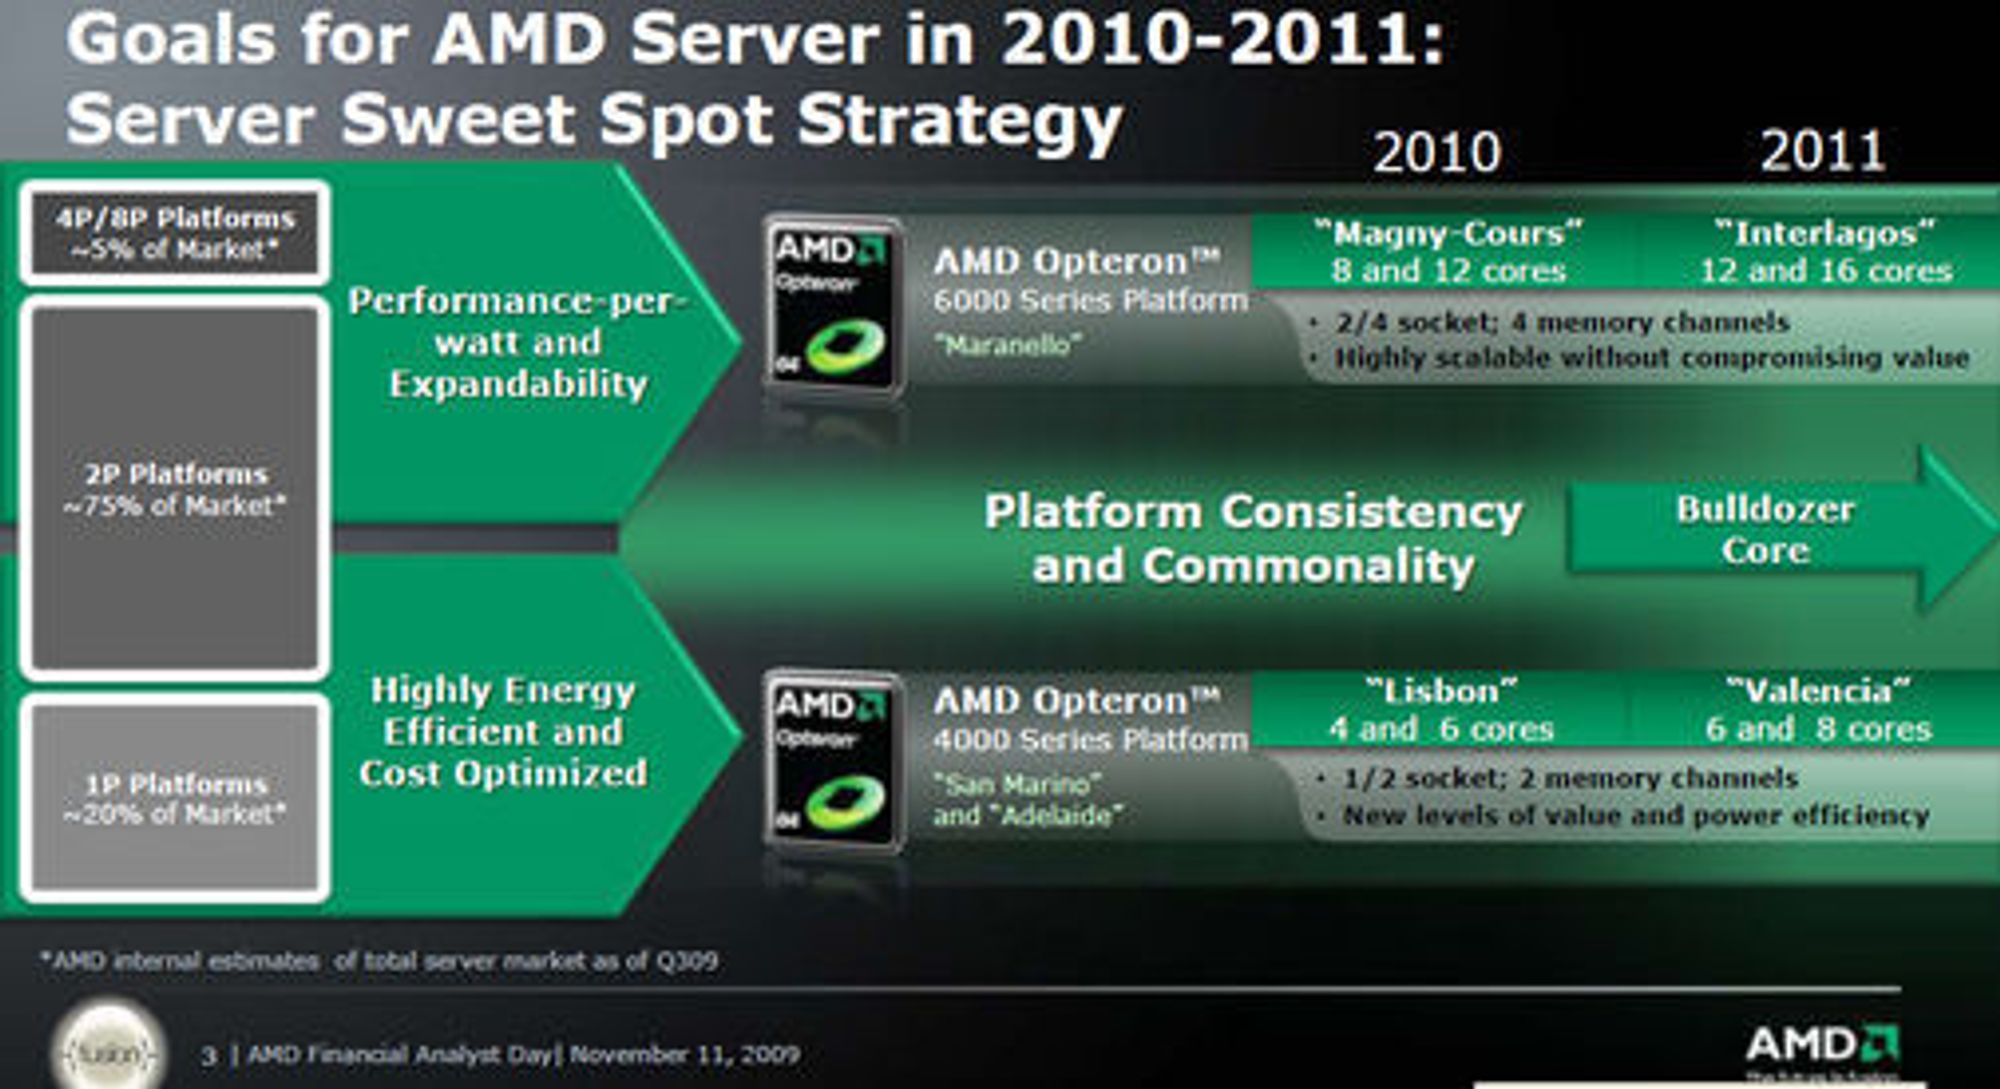 Veikart for AMDs serverplattform